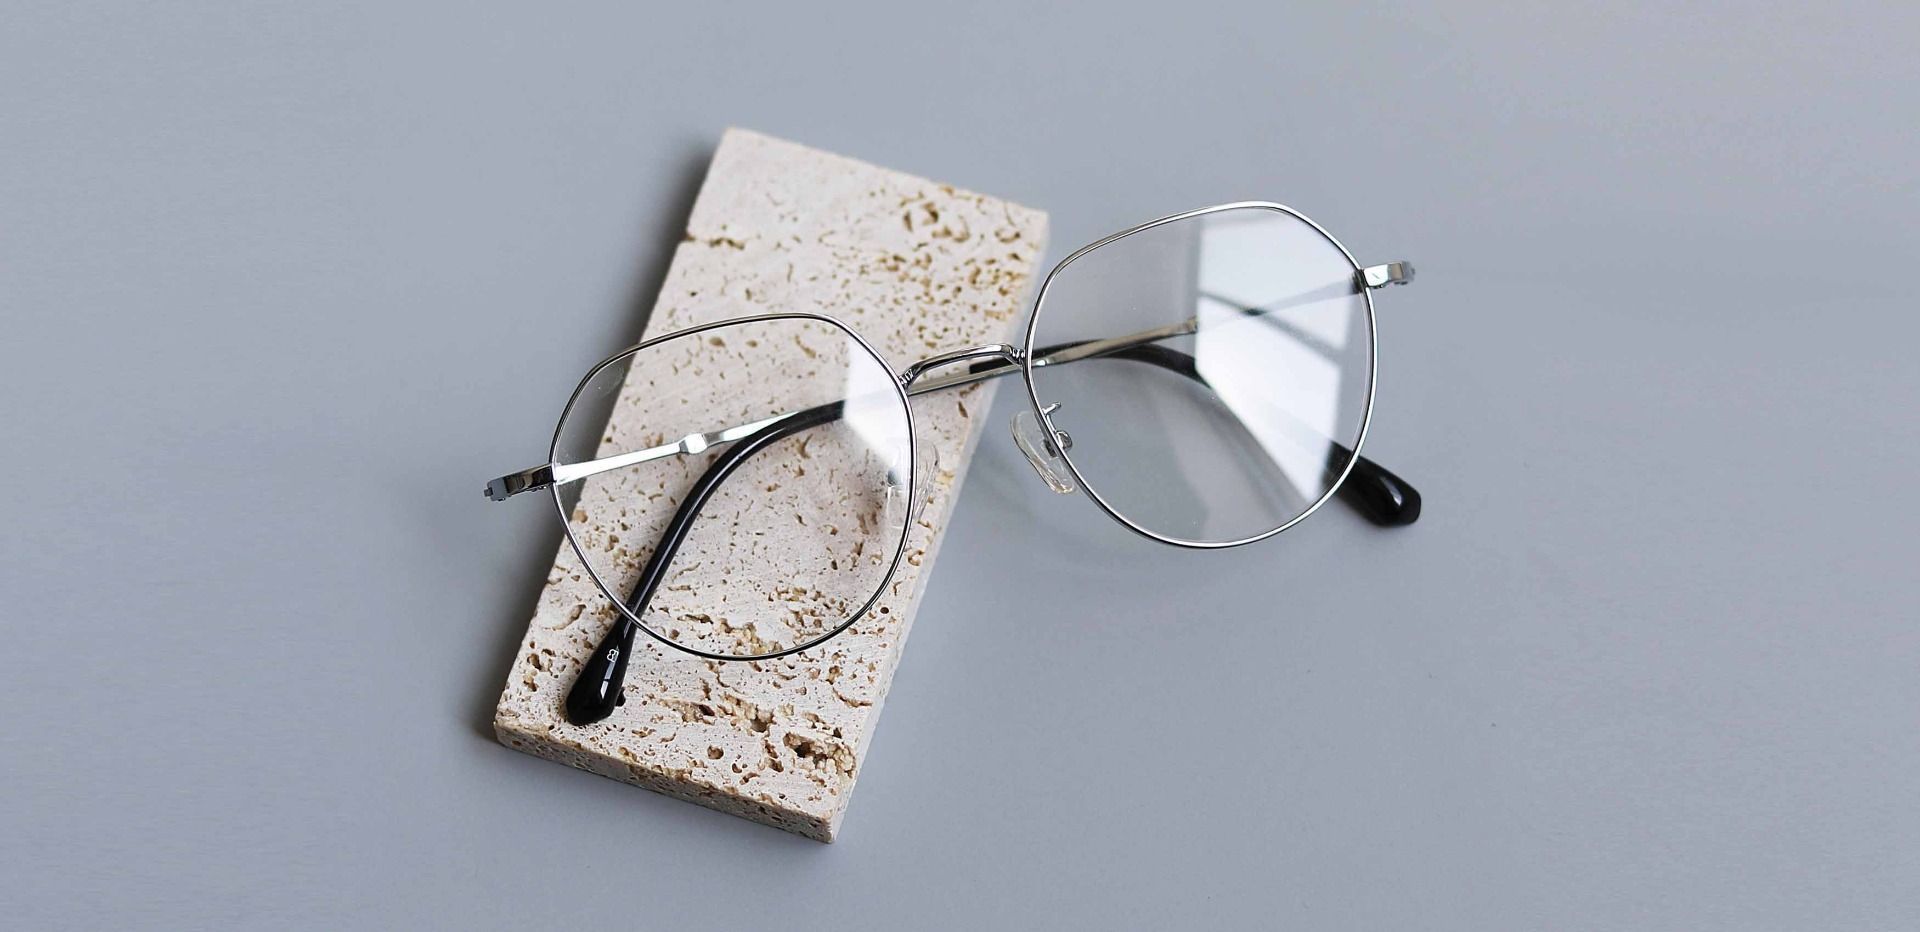 Langdon Geometric Progressive Glasses - Silver